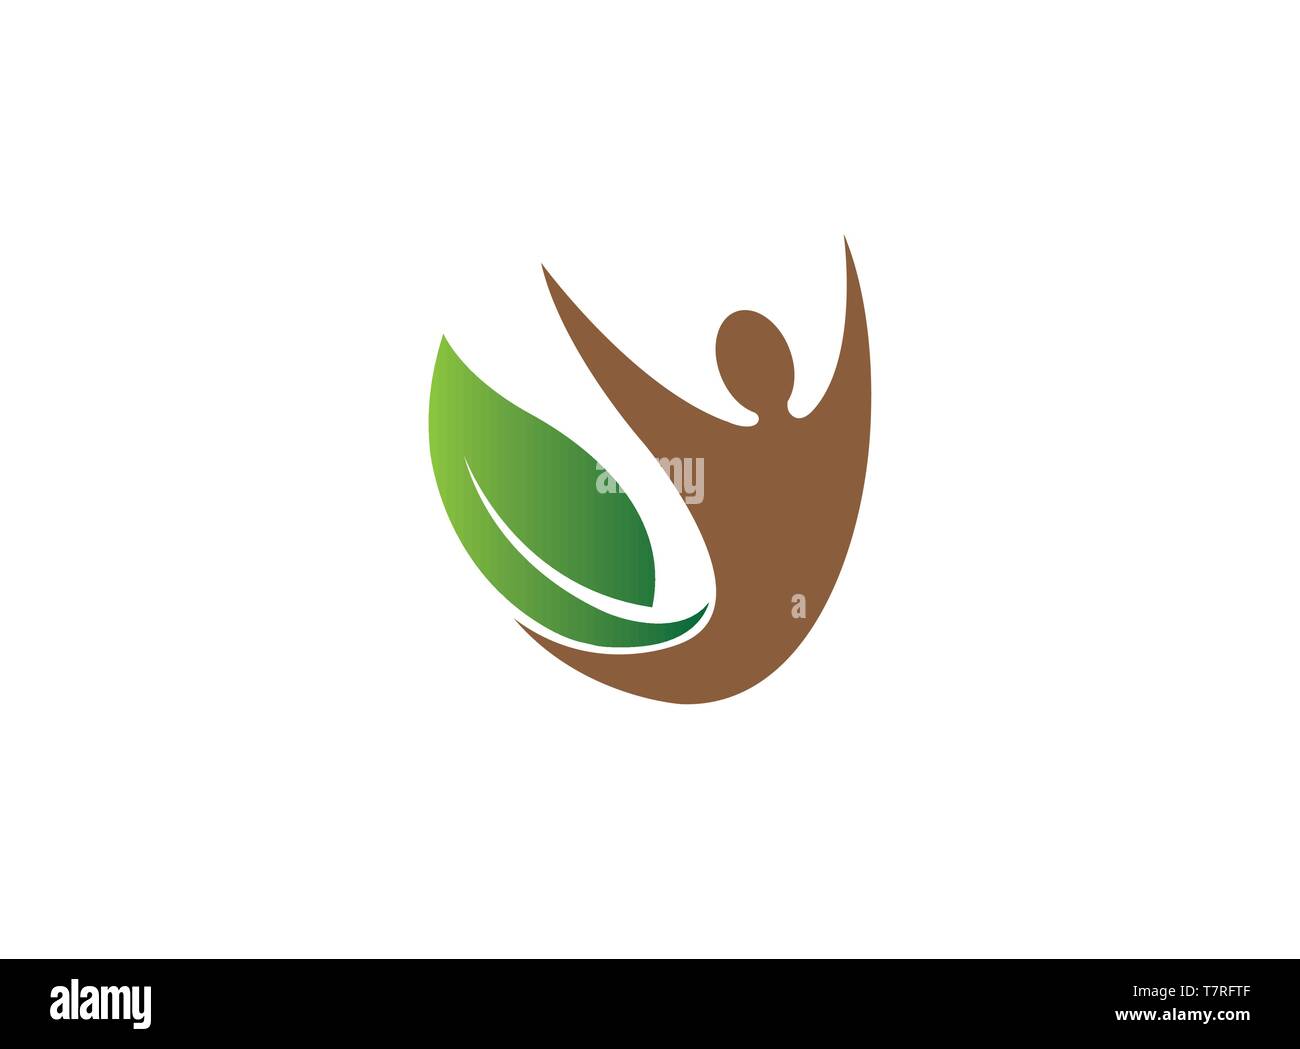 Wellness body leaf logo design illustration, zen icon, a health symbol on white background Stock Vector